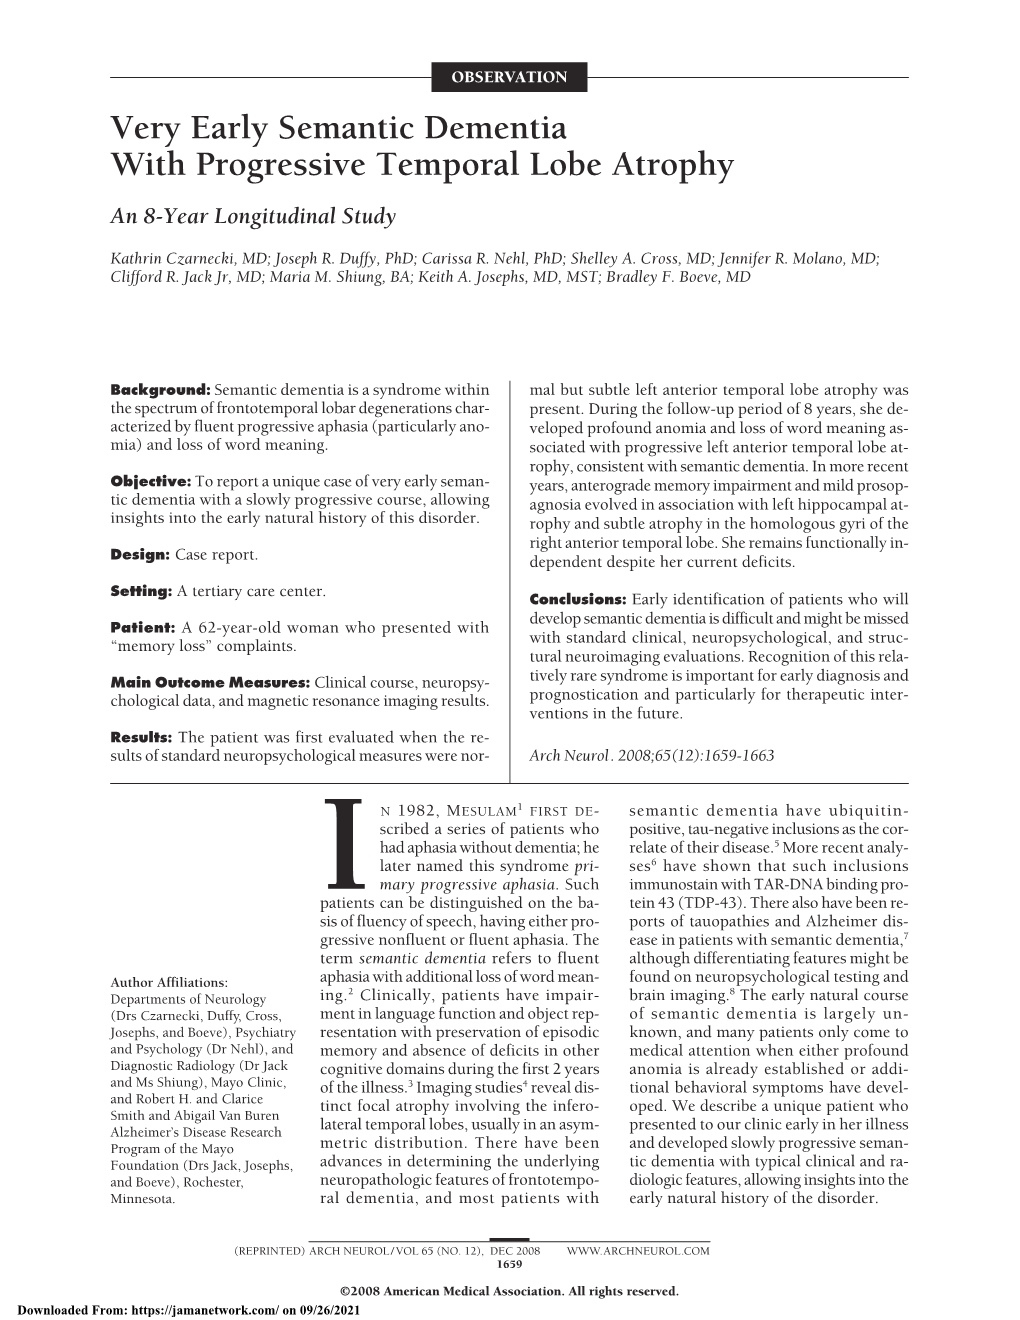 Very Early Semantic Dementia with Progressive Temporal Lobe Atrophy an 8-Year Longitudinal Study